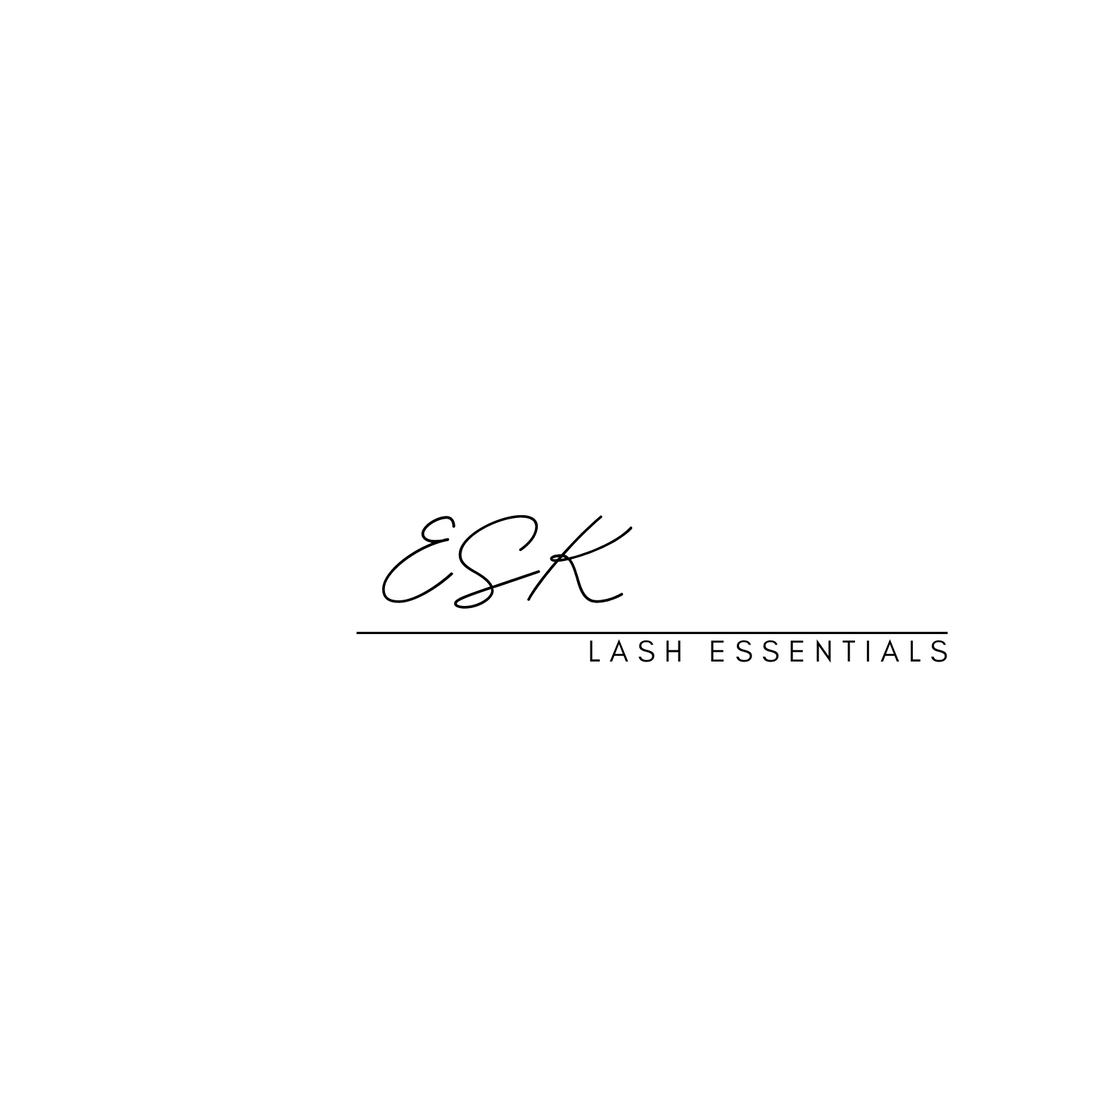 ESK Lash Drama Magic ESK eyelash extension products and supplies 8/18/23 4:15pm